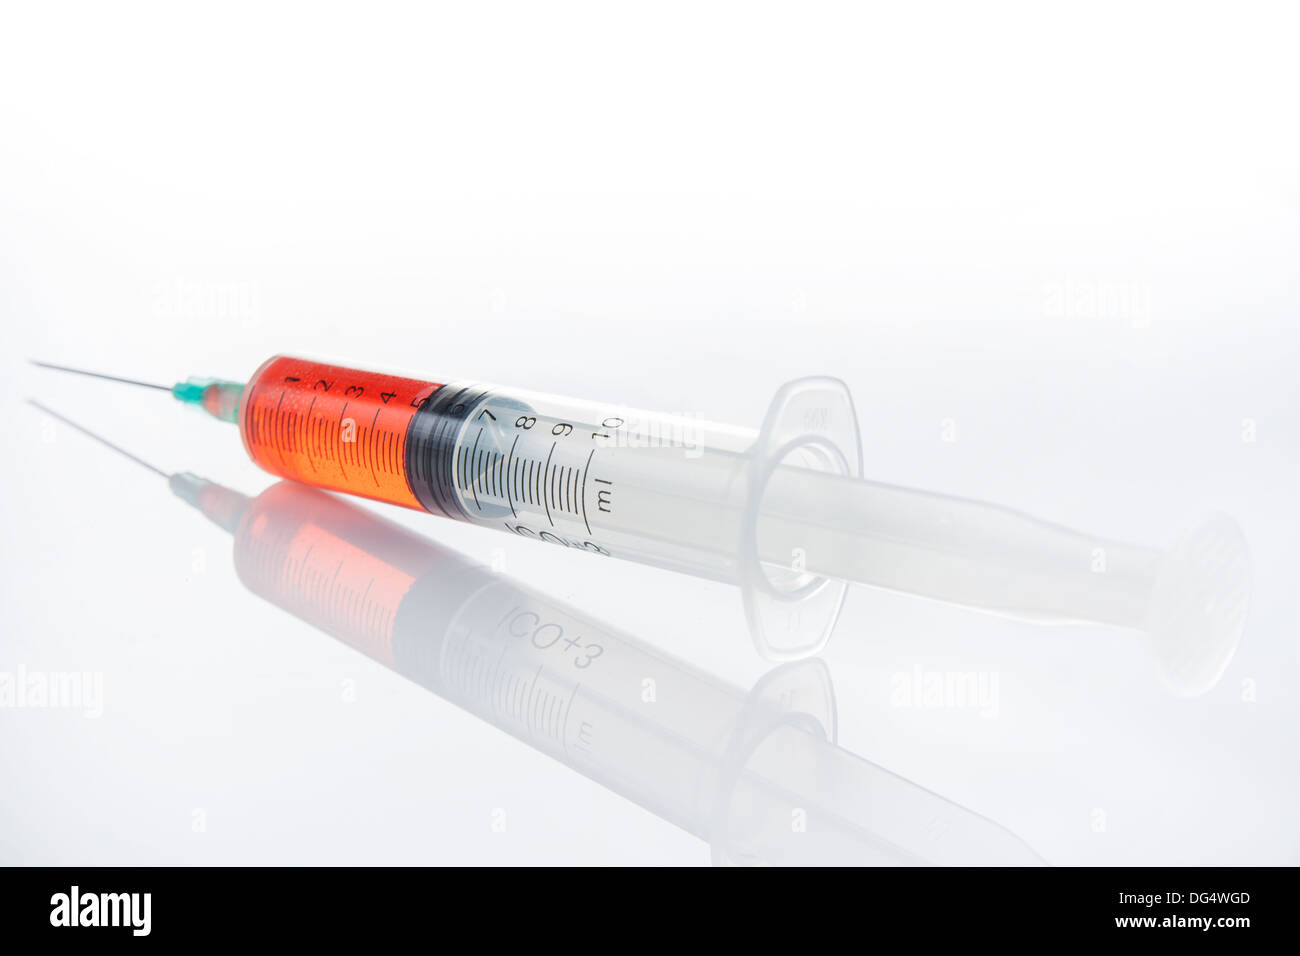 syringe with red fluid on white background Stock Photo